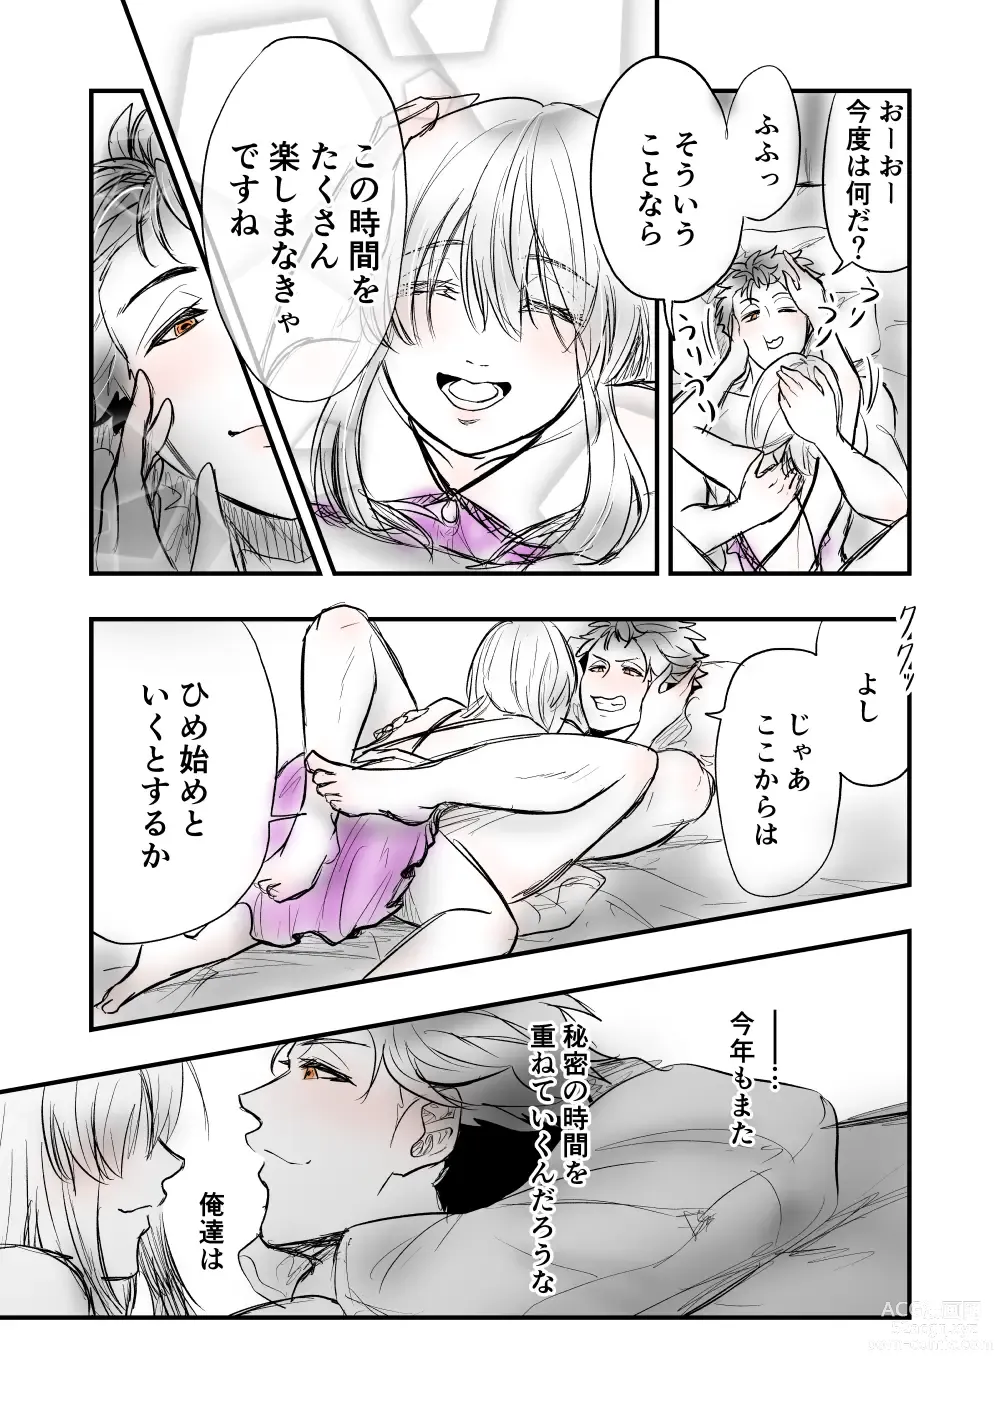 Page 35 of doujinshi 5